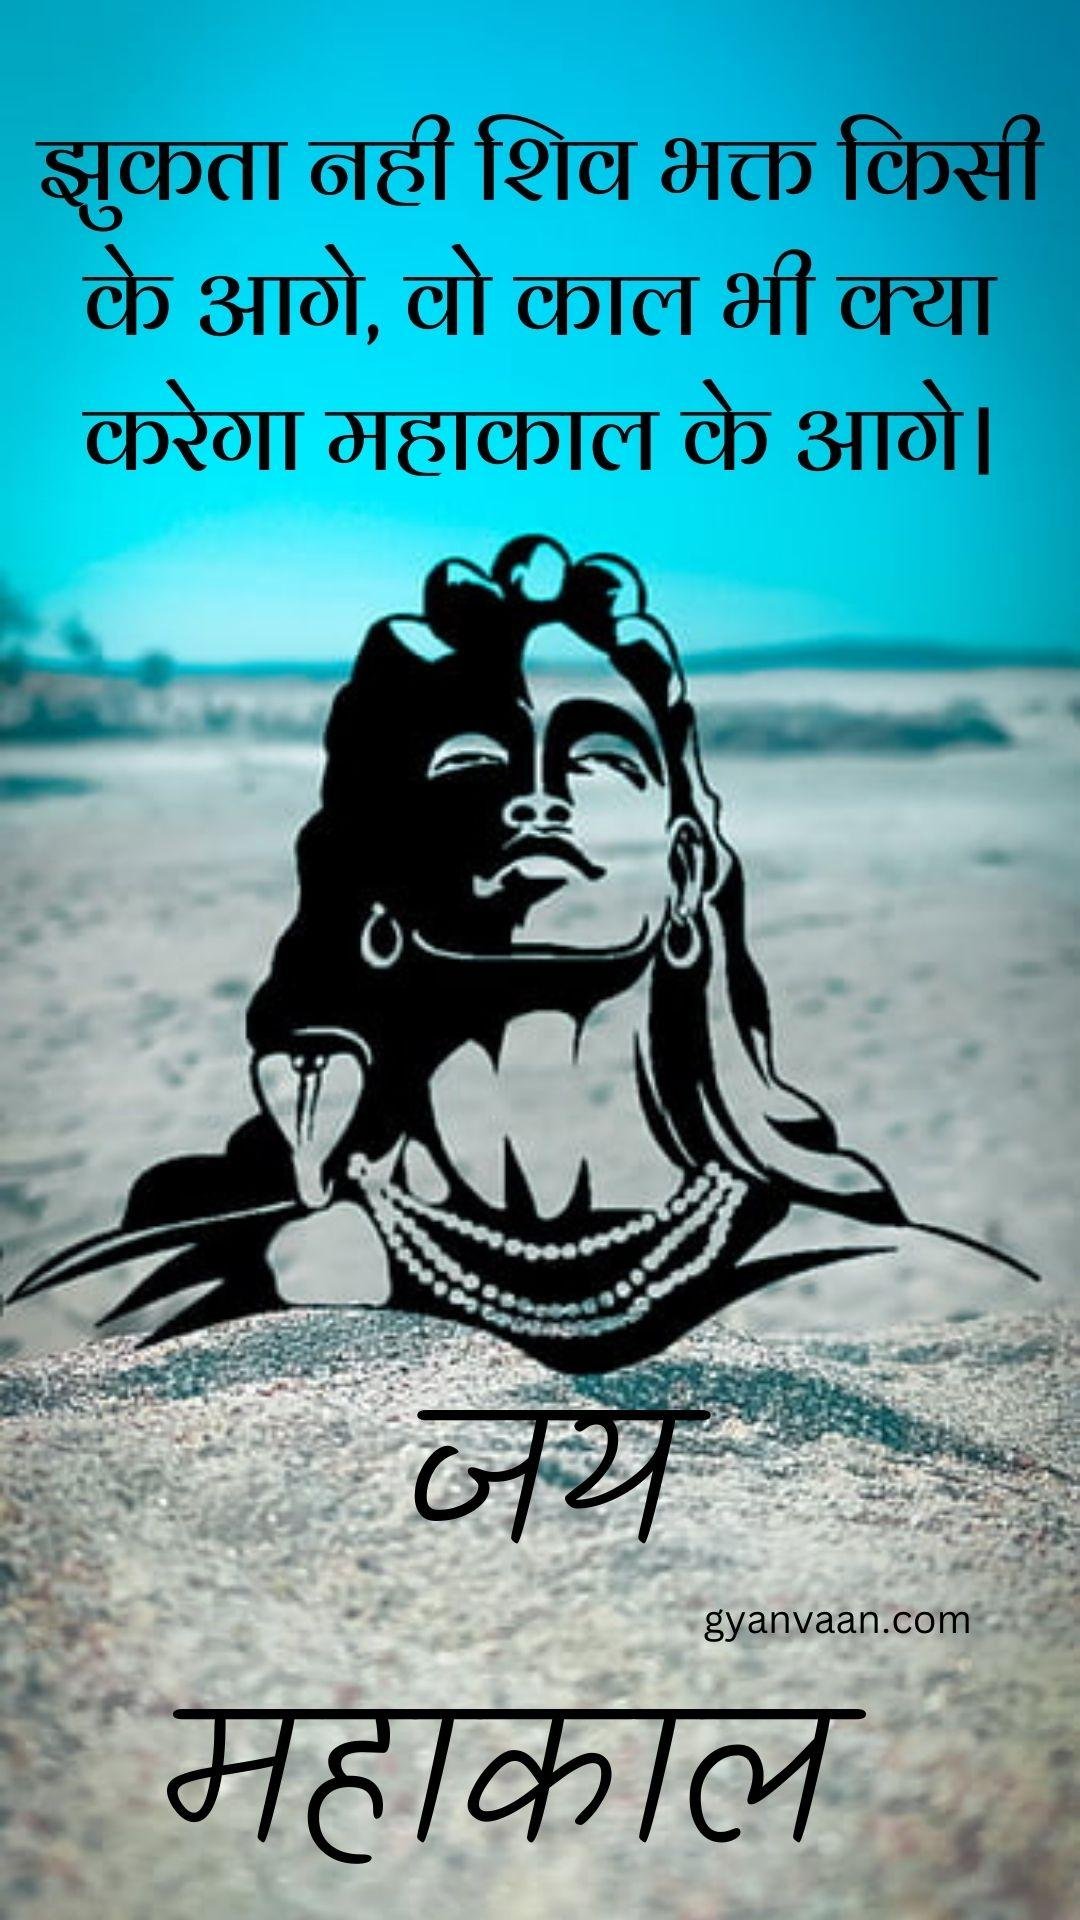 Lord Shiva Mahadev Quotes And Mahakal Status In Hindi For Mobile 24 - Shiva Quotes